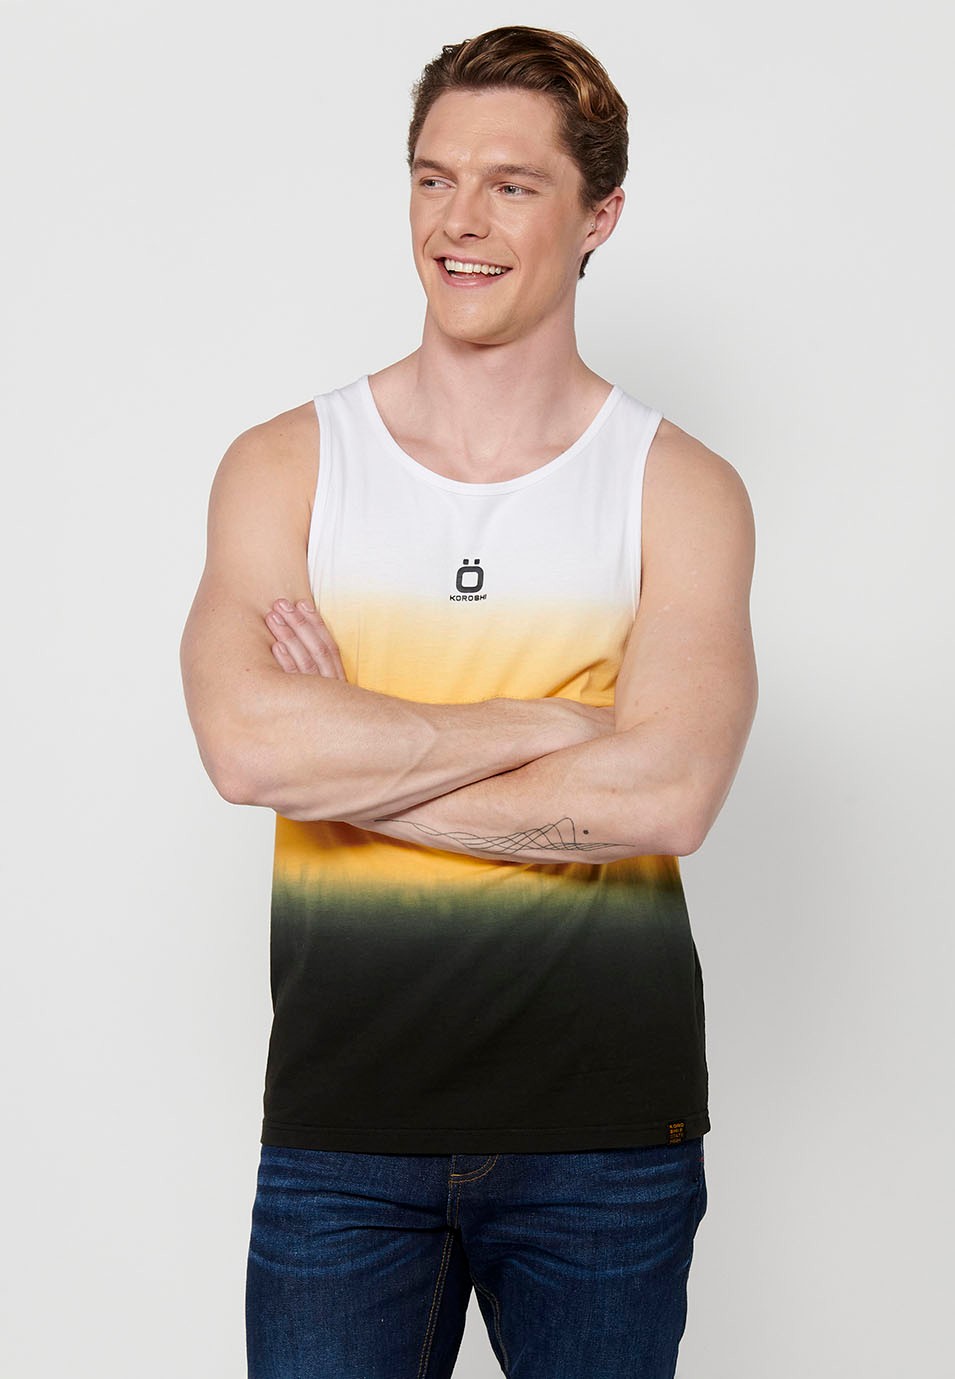 Camiseta de tirantes sin mangas, de algodon, degradado de colores para hombre